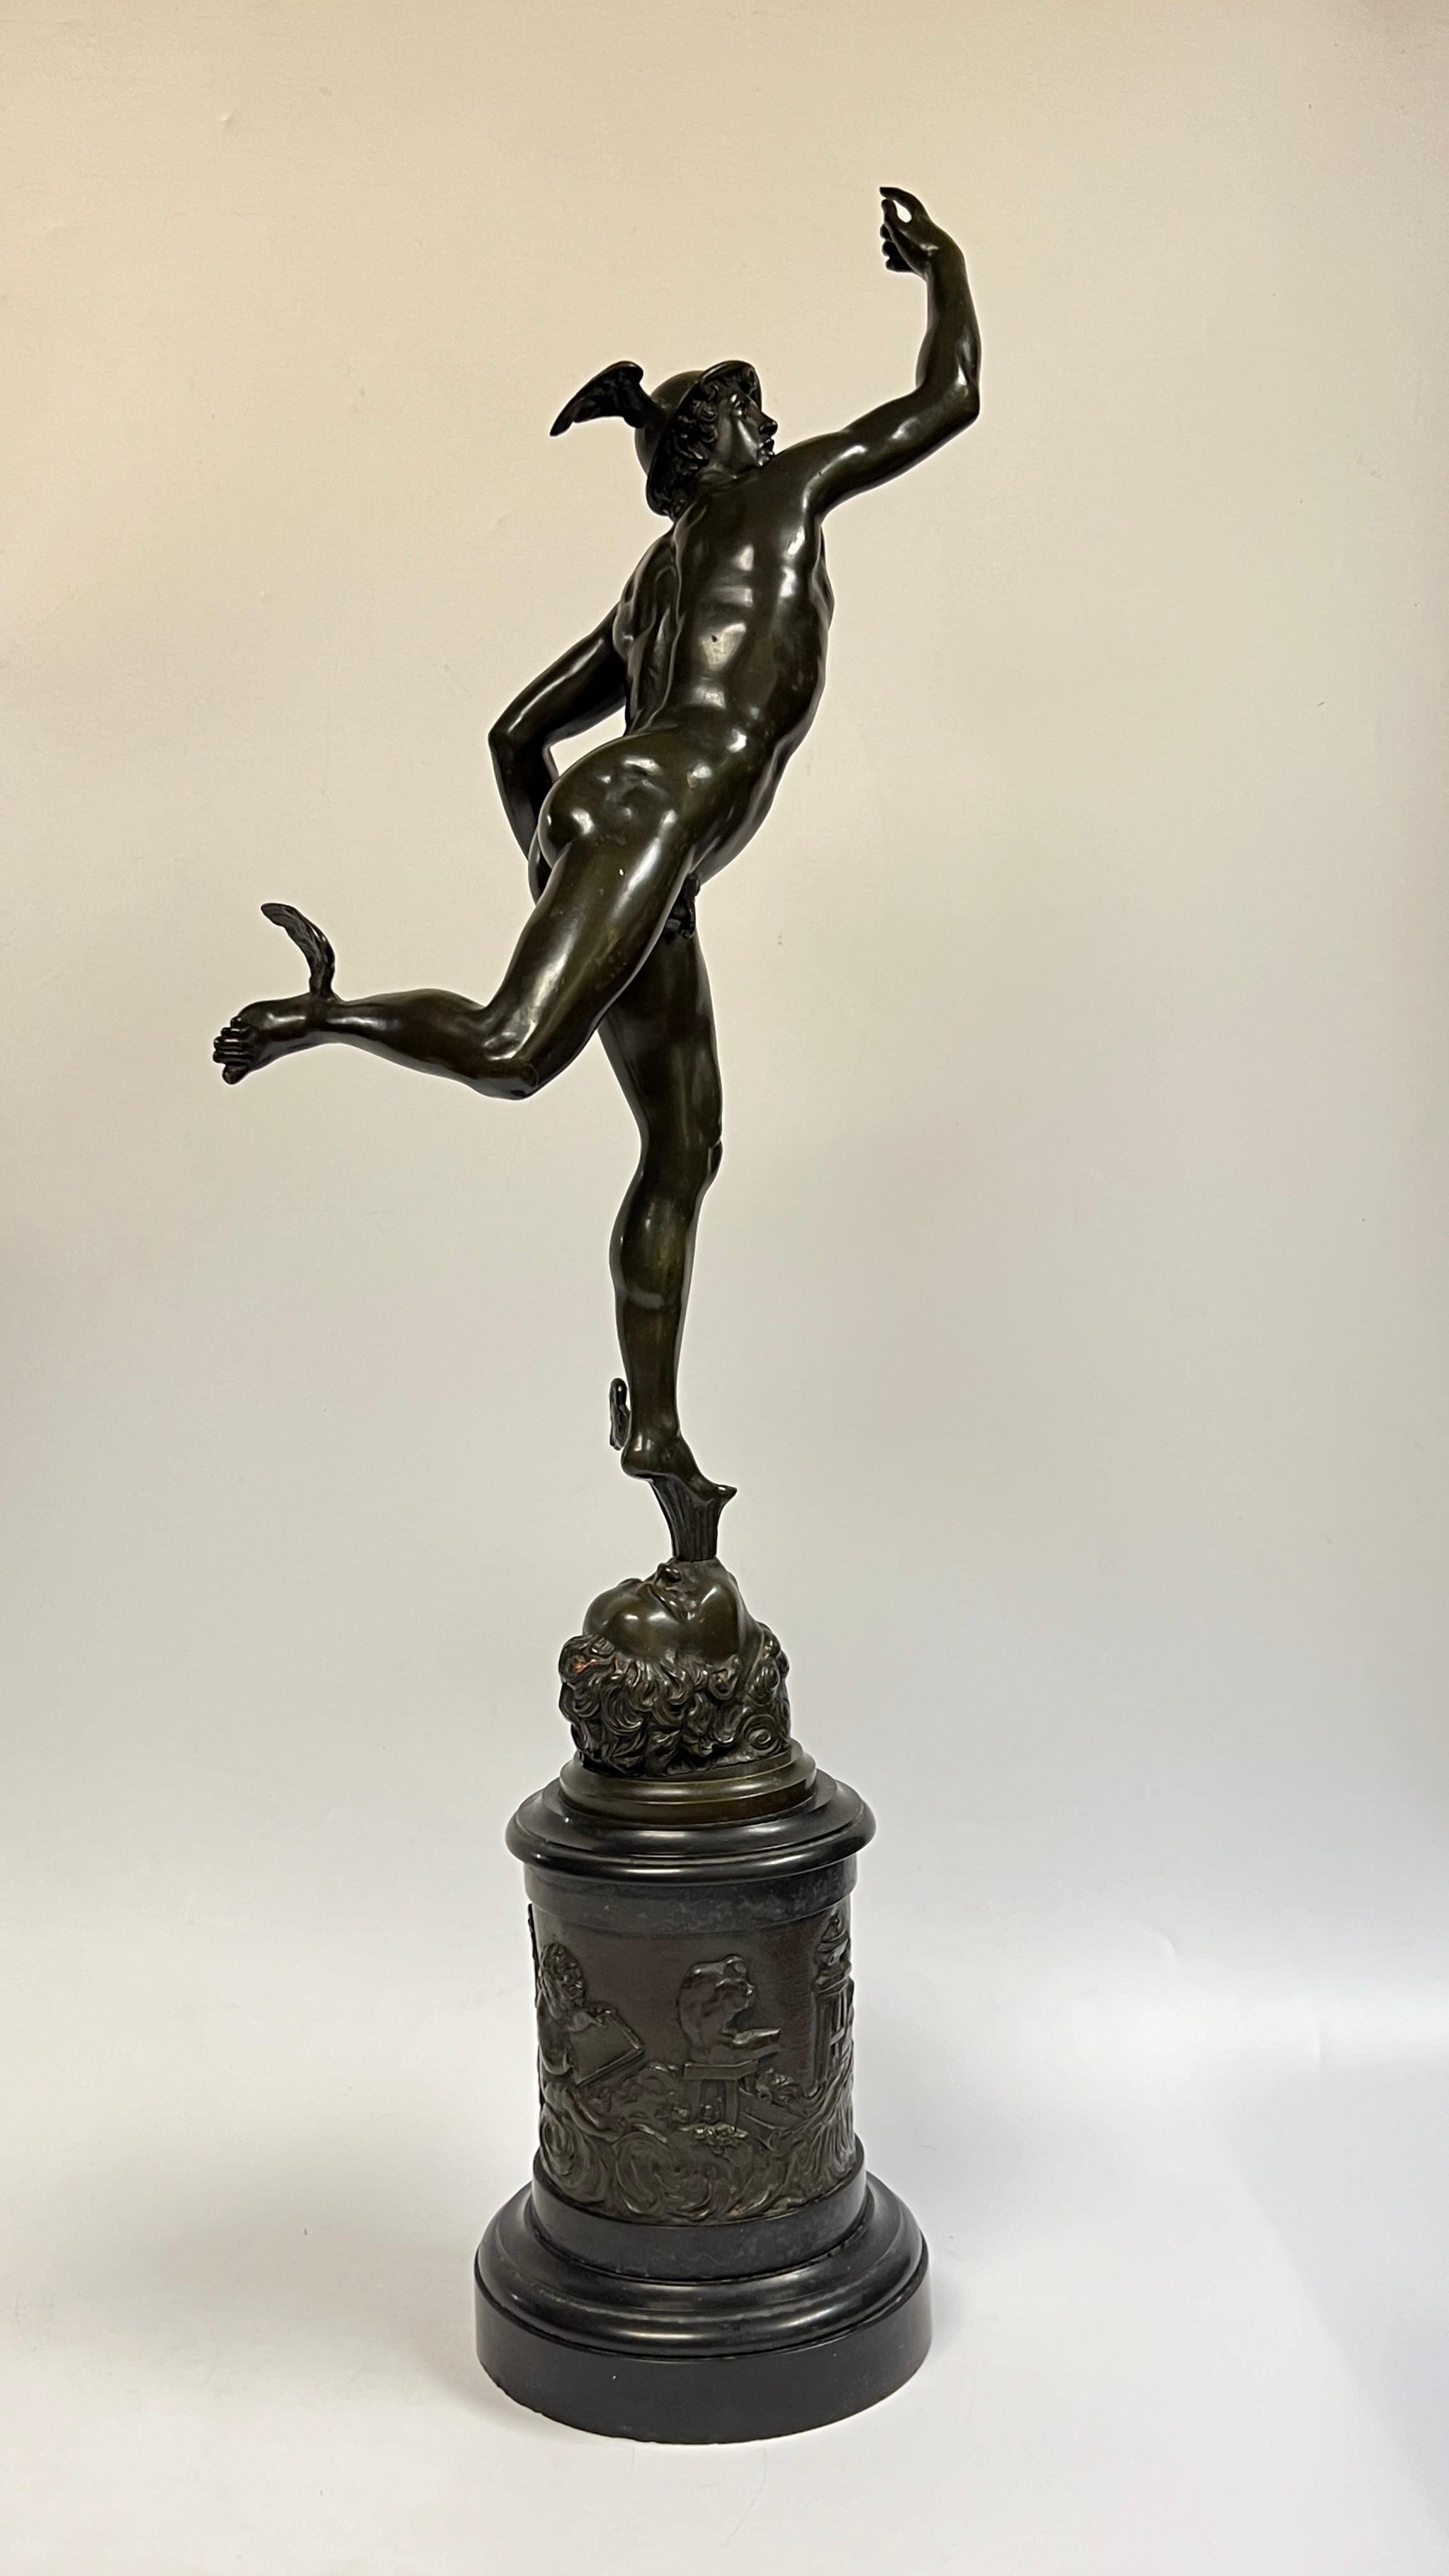 Neoclassical Revival 19th Century Mercury After Giambologna Grand Tour Bronze Sculpture For Sale